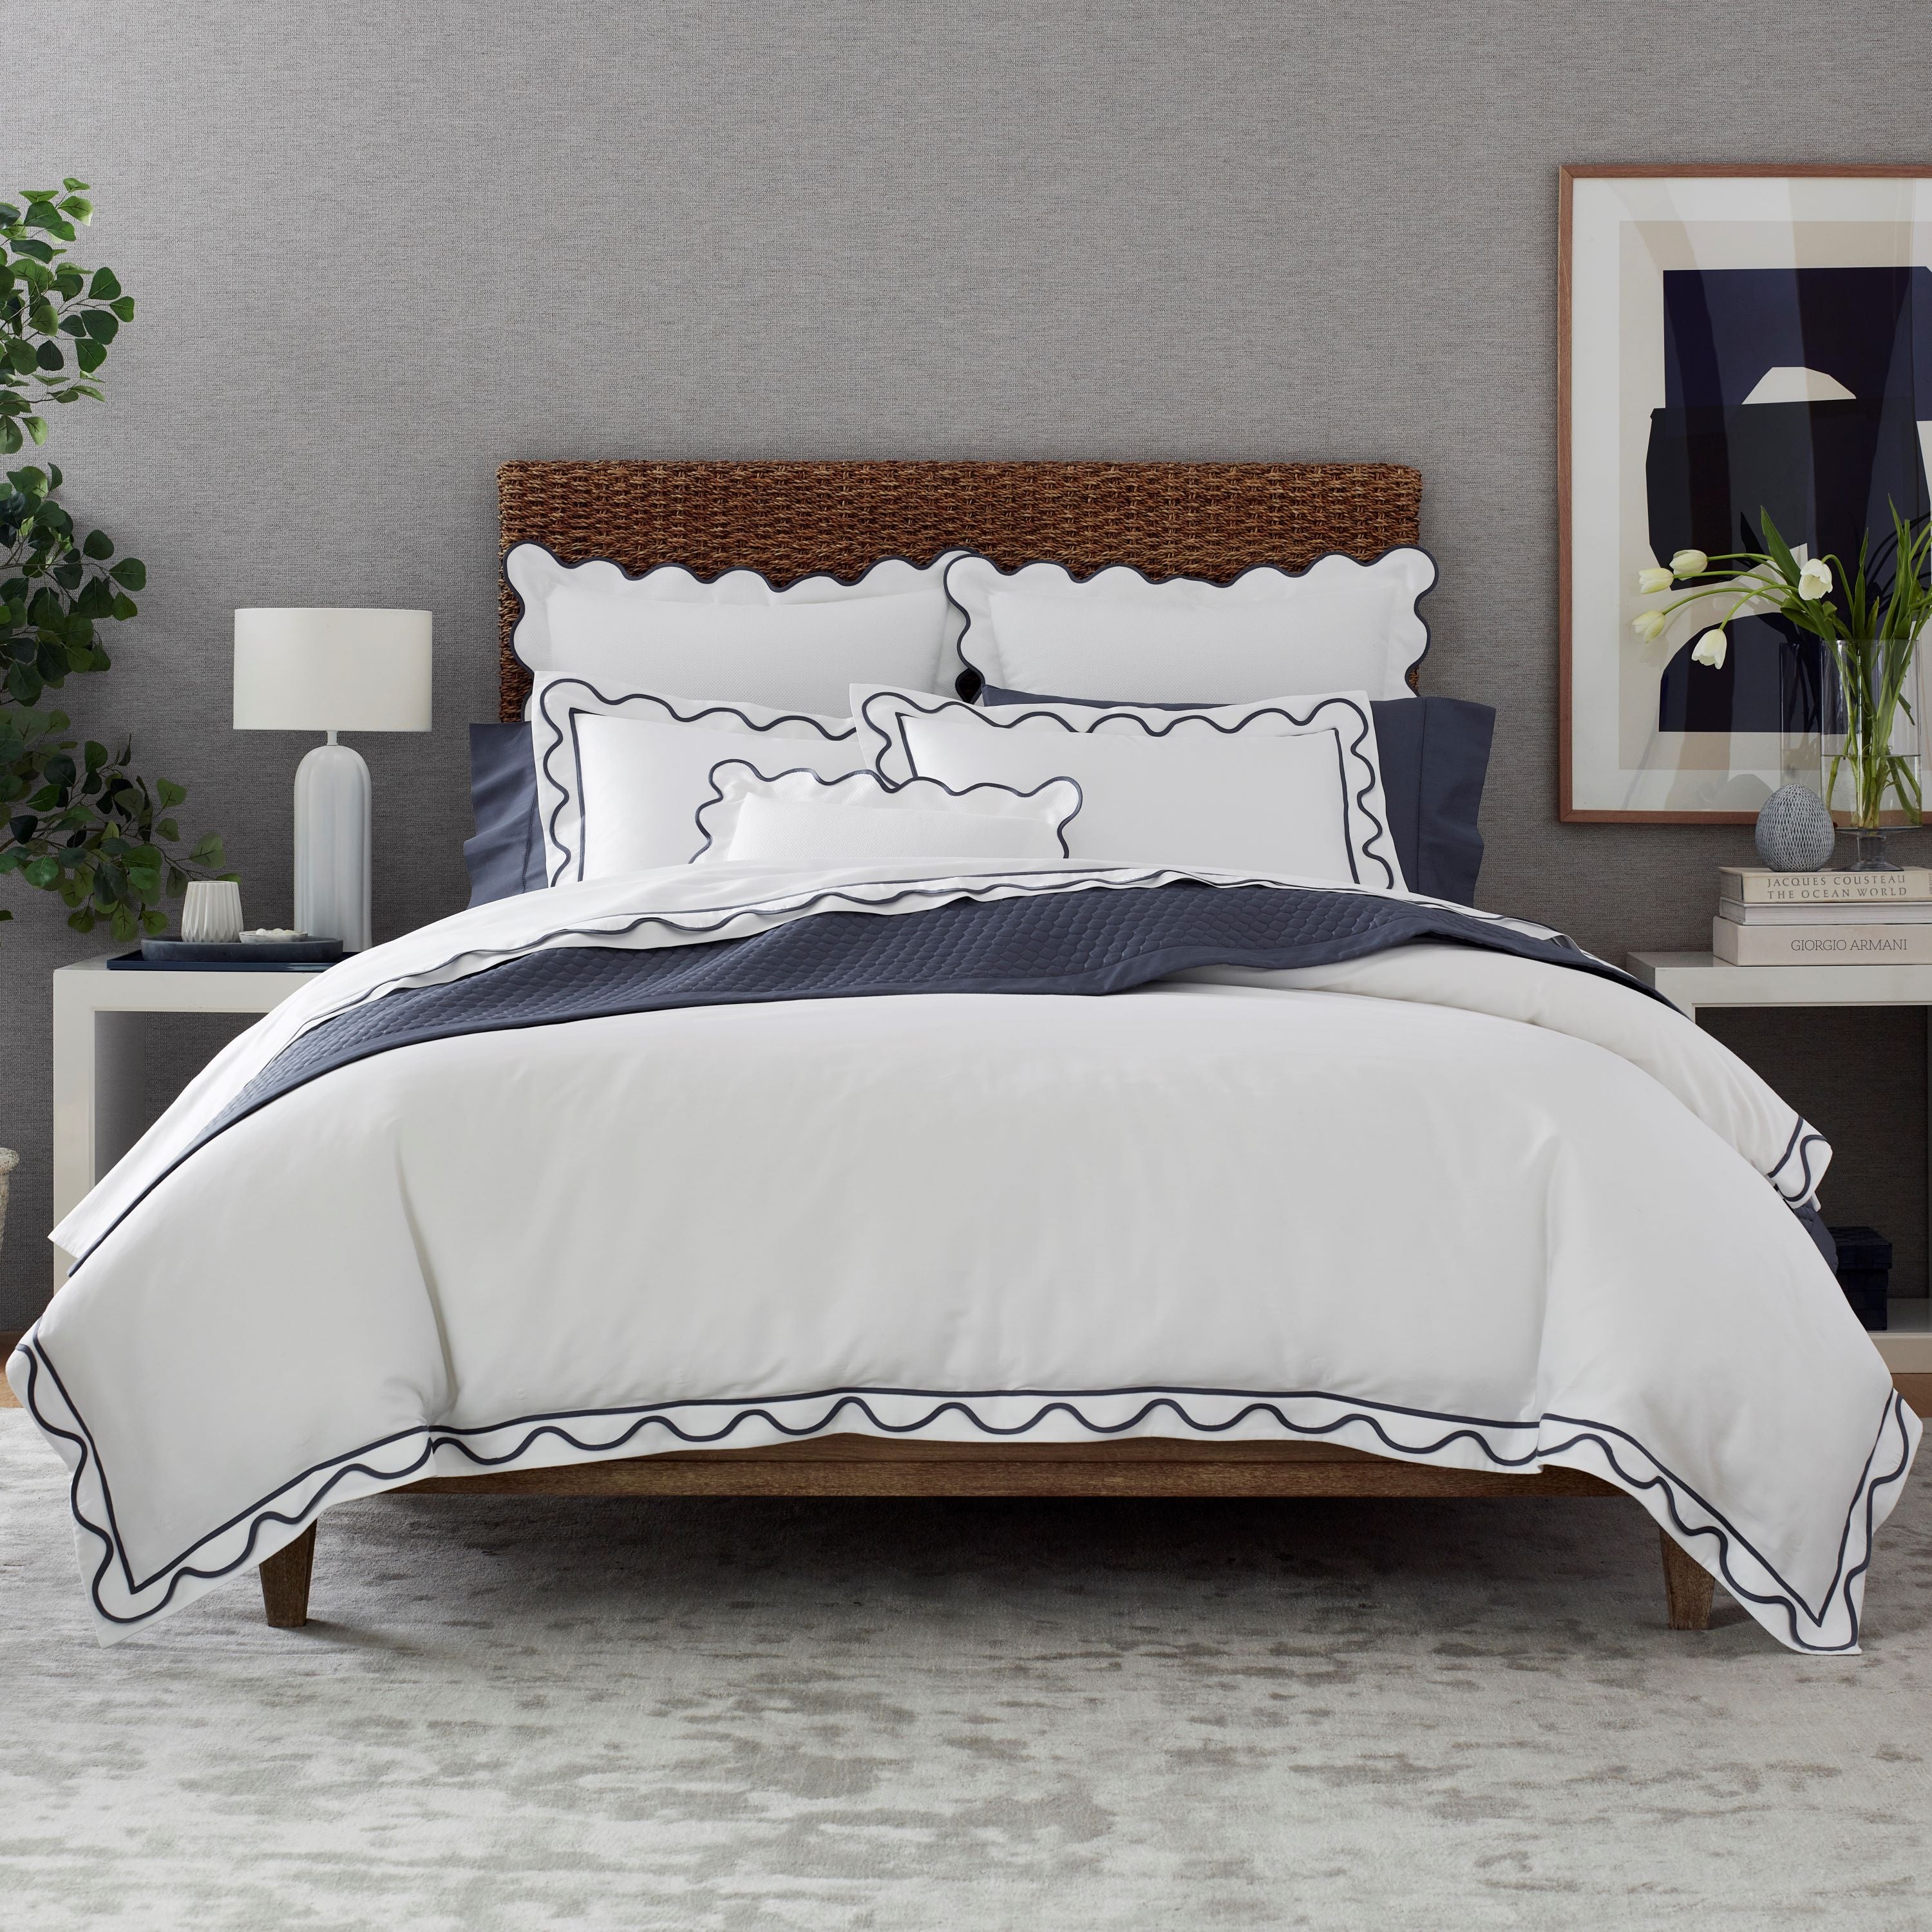 Buy wholesale Burgy Malva Two-Piece Duvet Cover Bed 135 cm